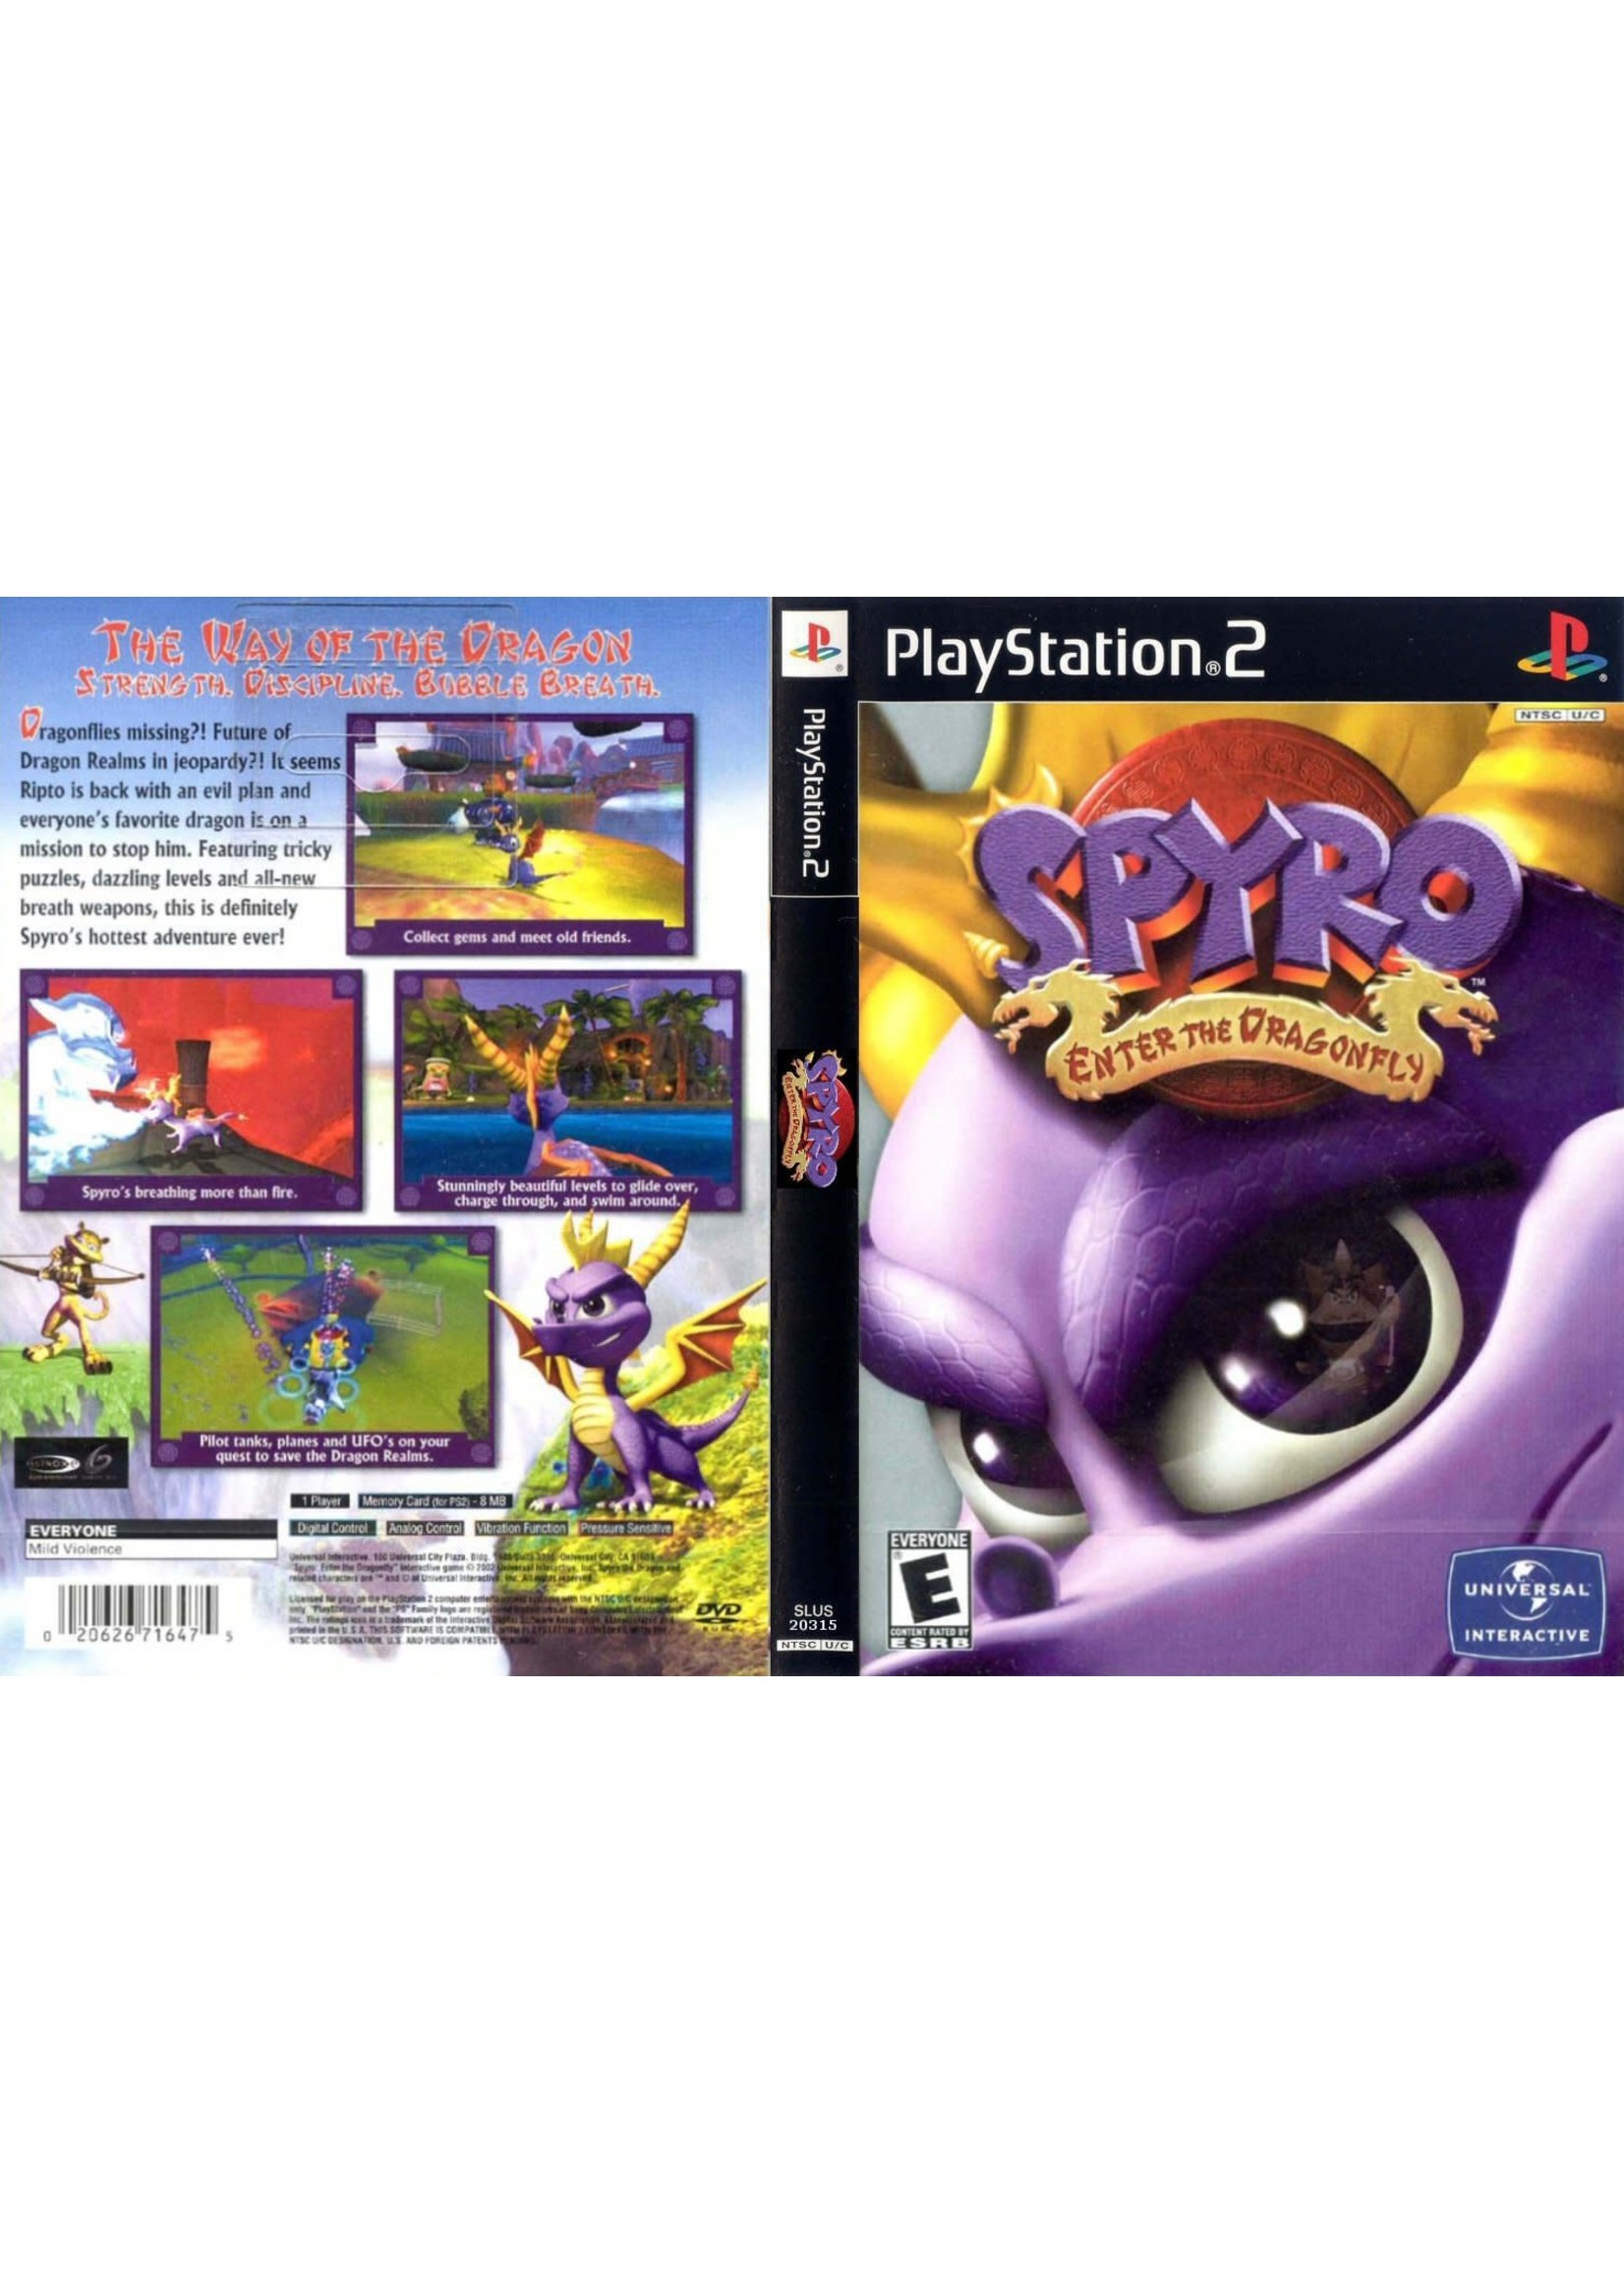 Sony Playstation 2 (PS2) Spyro Enter the Dragonfly